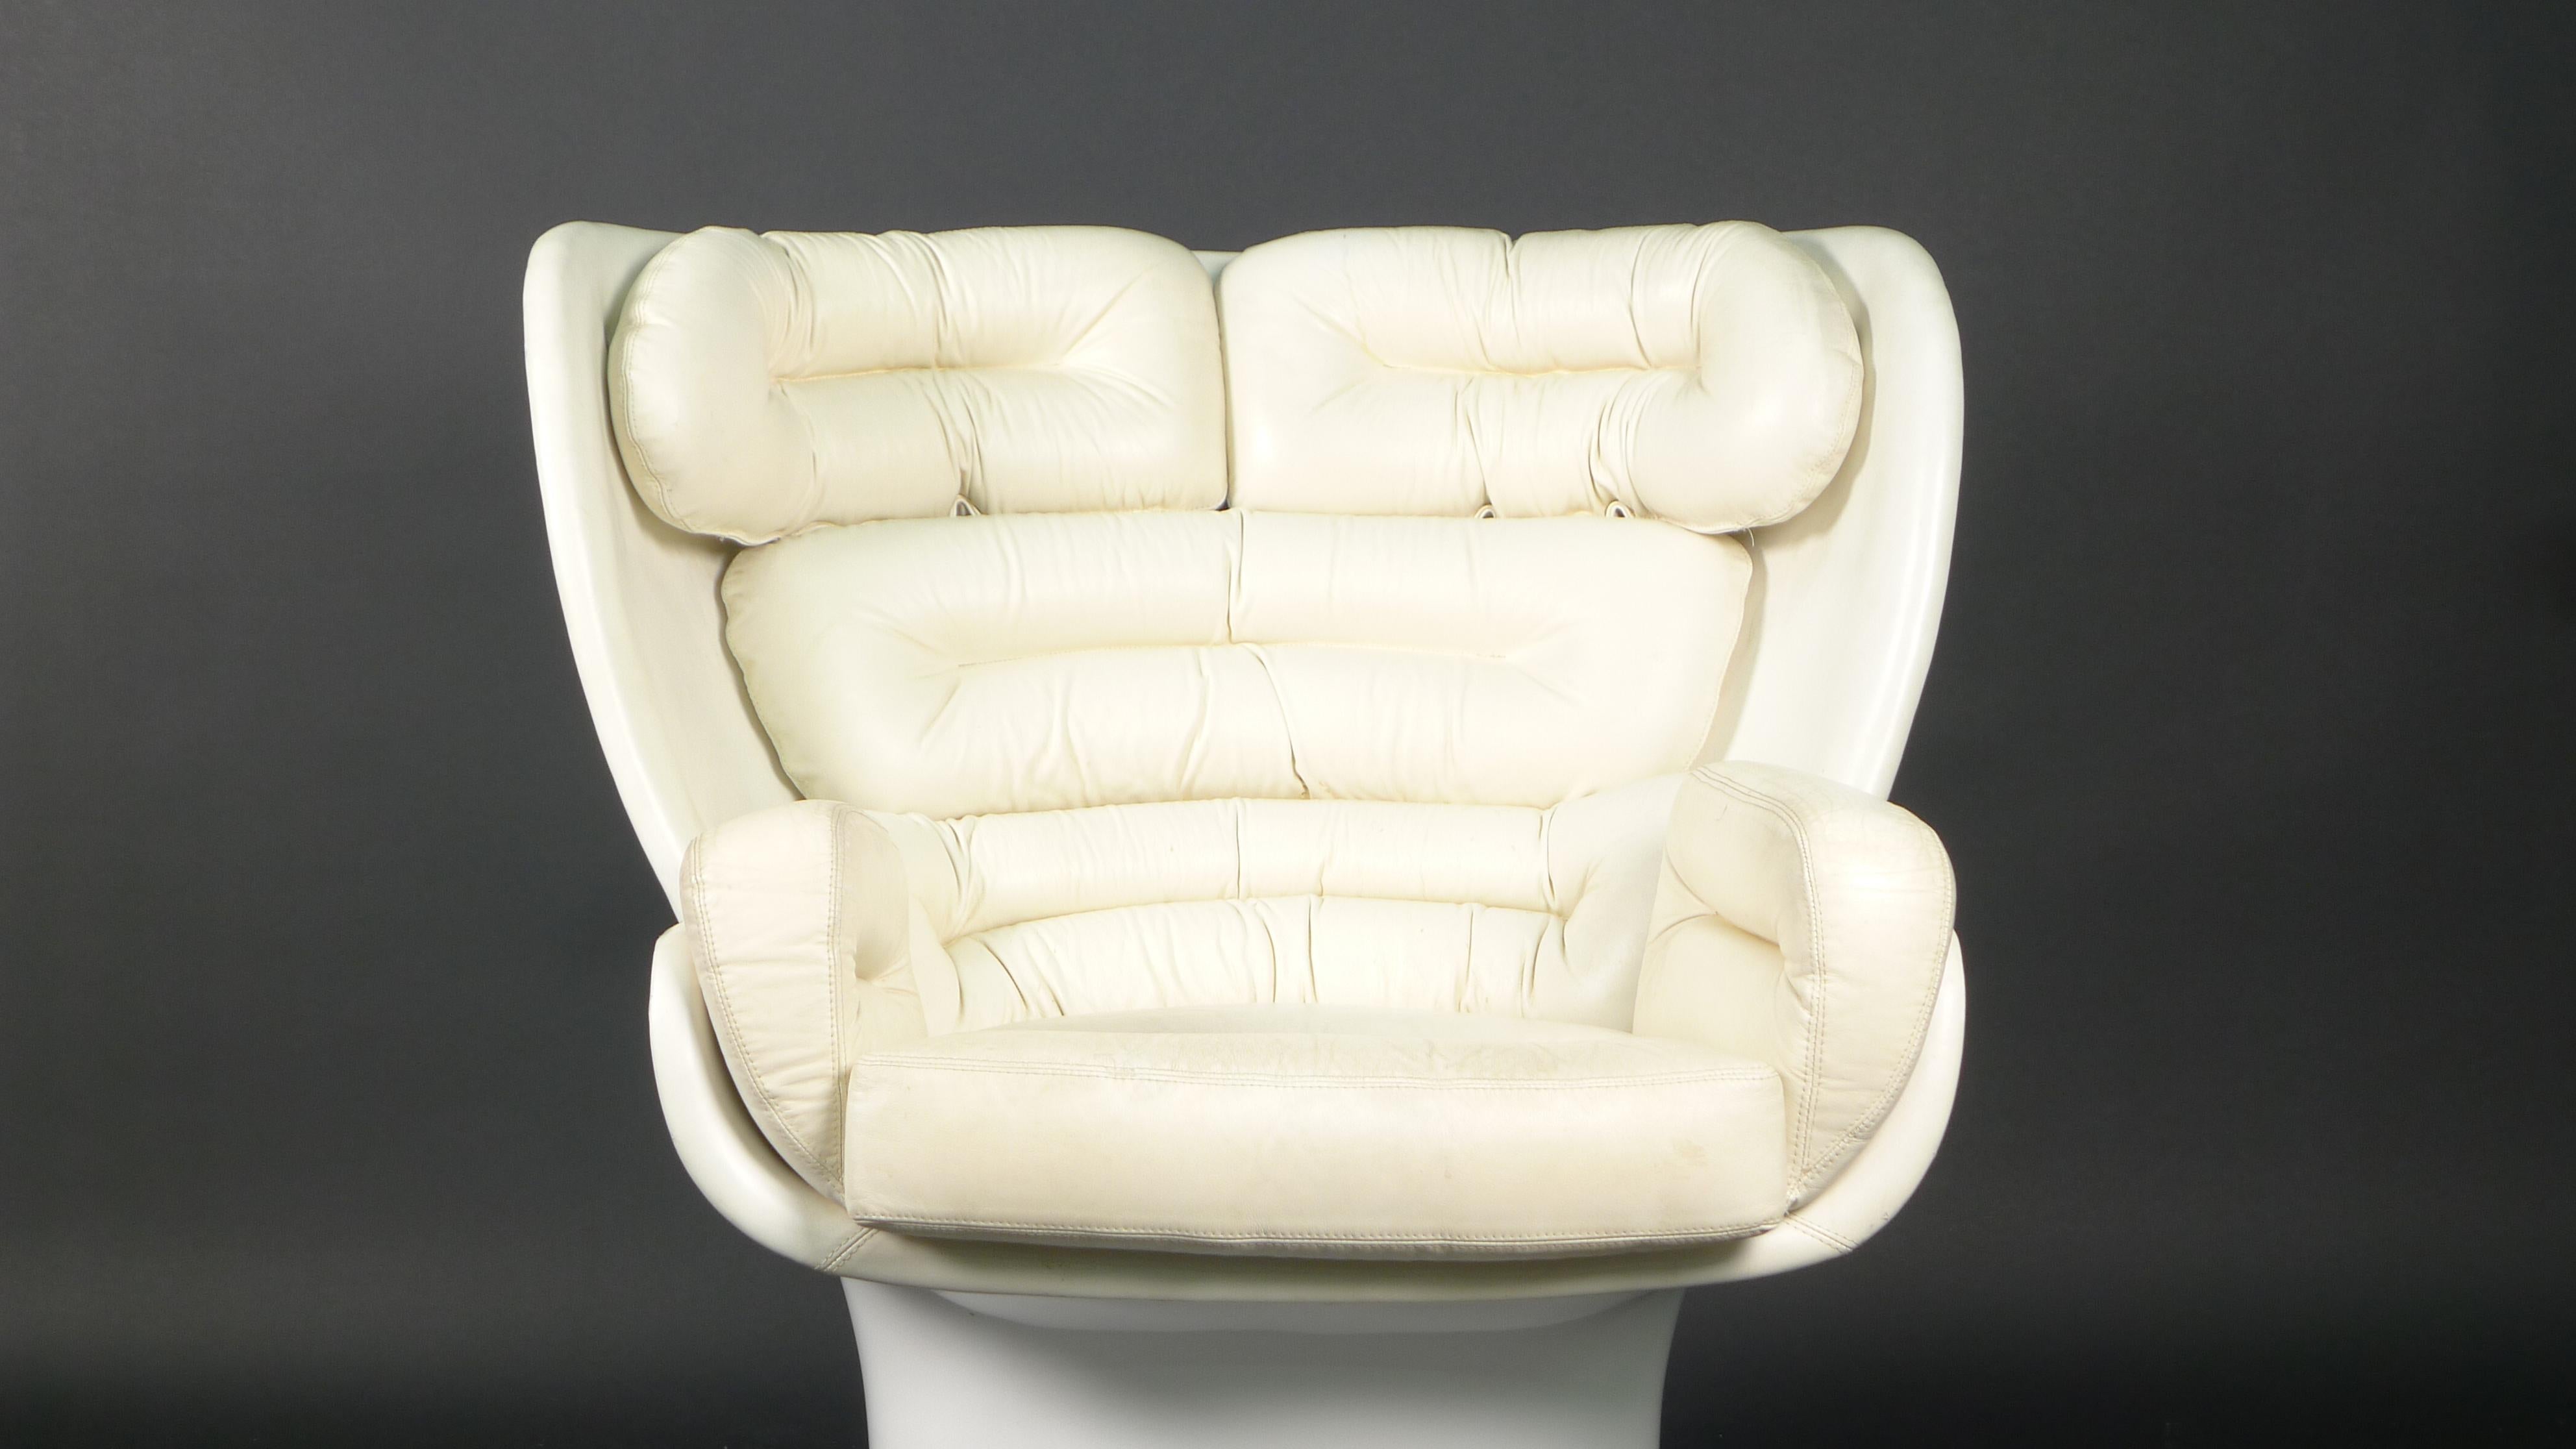 Italian Joe Colombo 'Elda' Lounge Chair, White Leather and Fibreglass, by Comfort, Italy